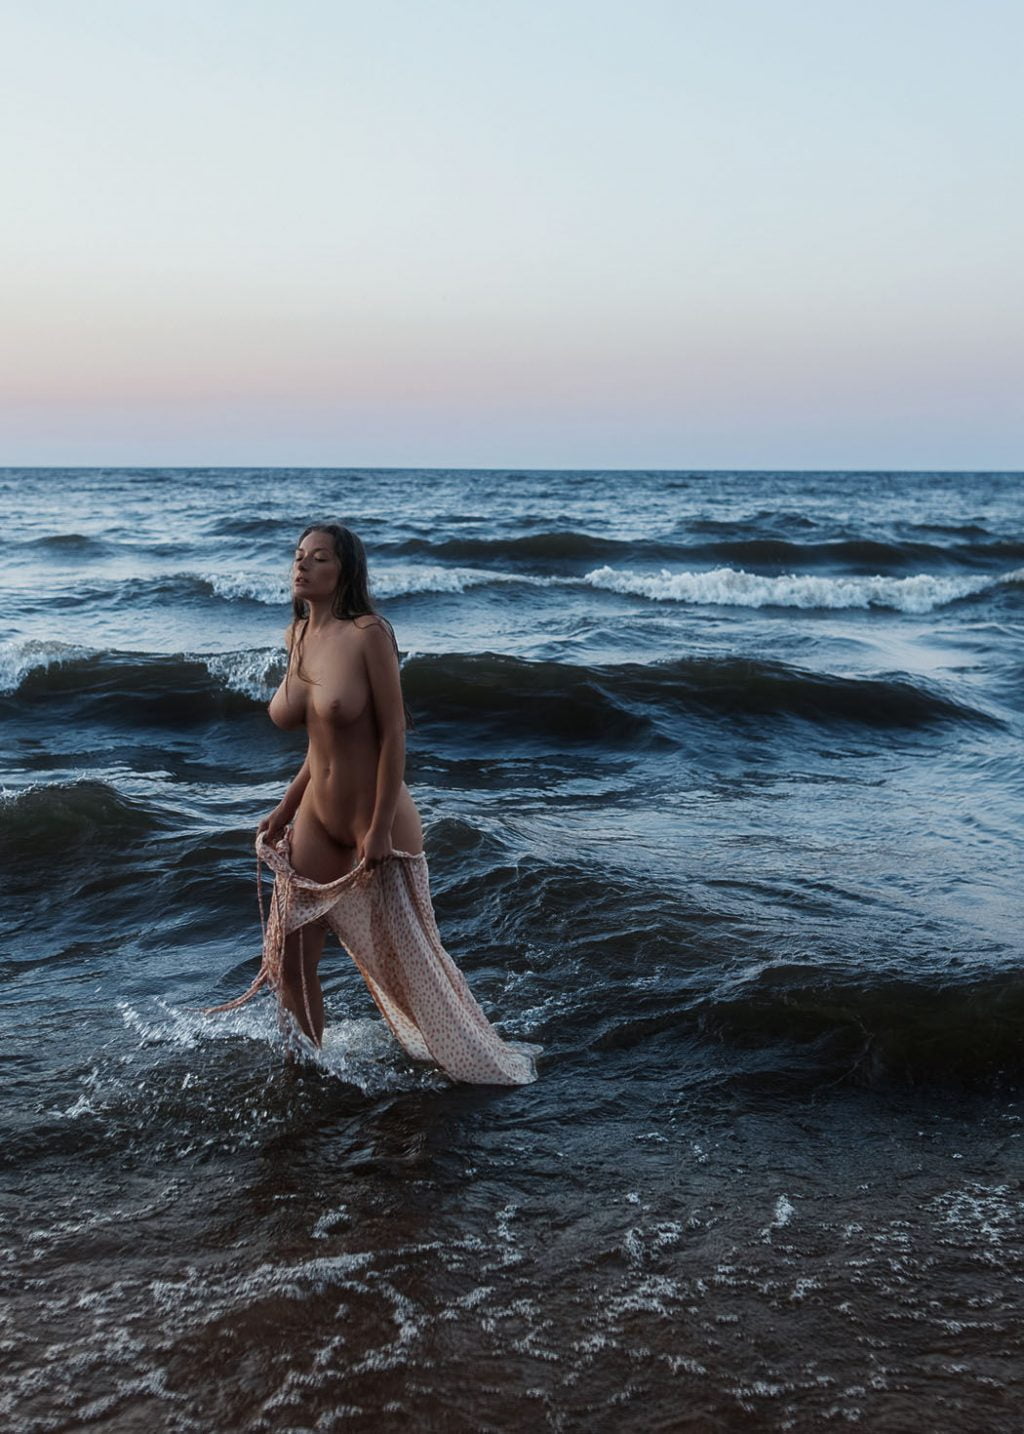 Tatiana mertsalova nude